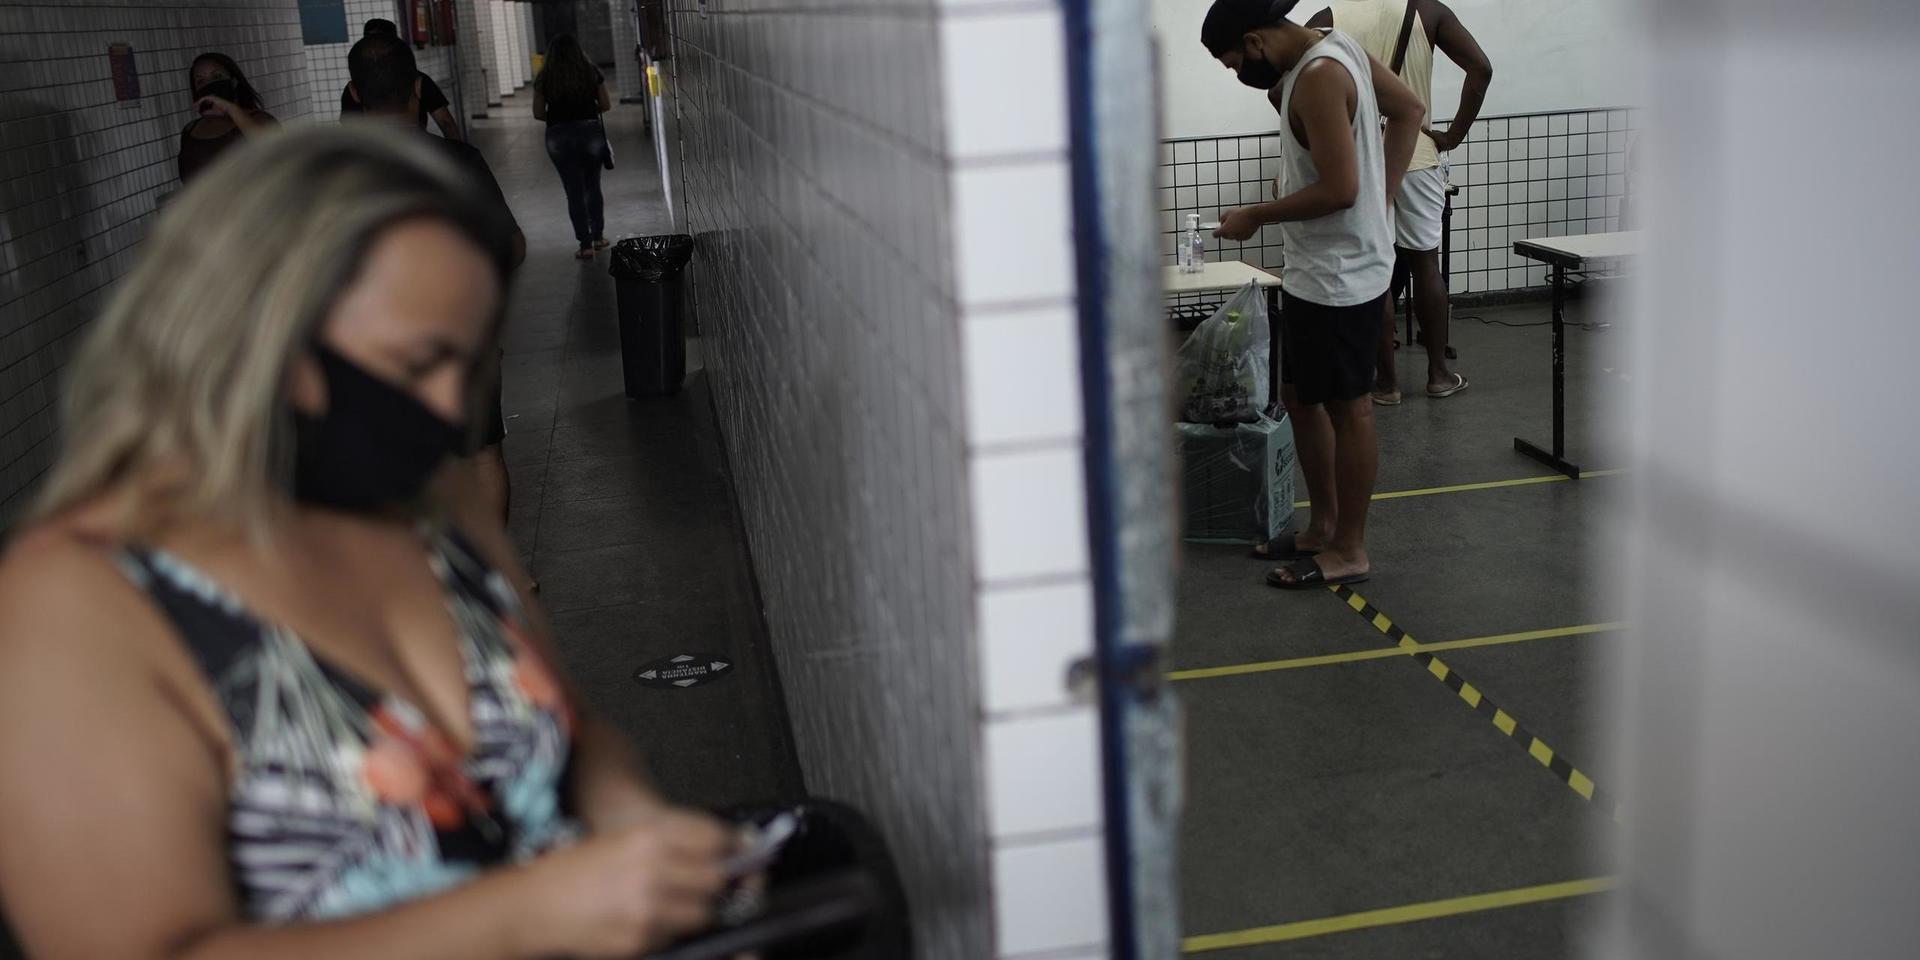 Coronapandemin påverkat valet i Brasilien. Bilden från en vallokal i Rio de Janeiro.